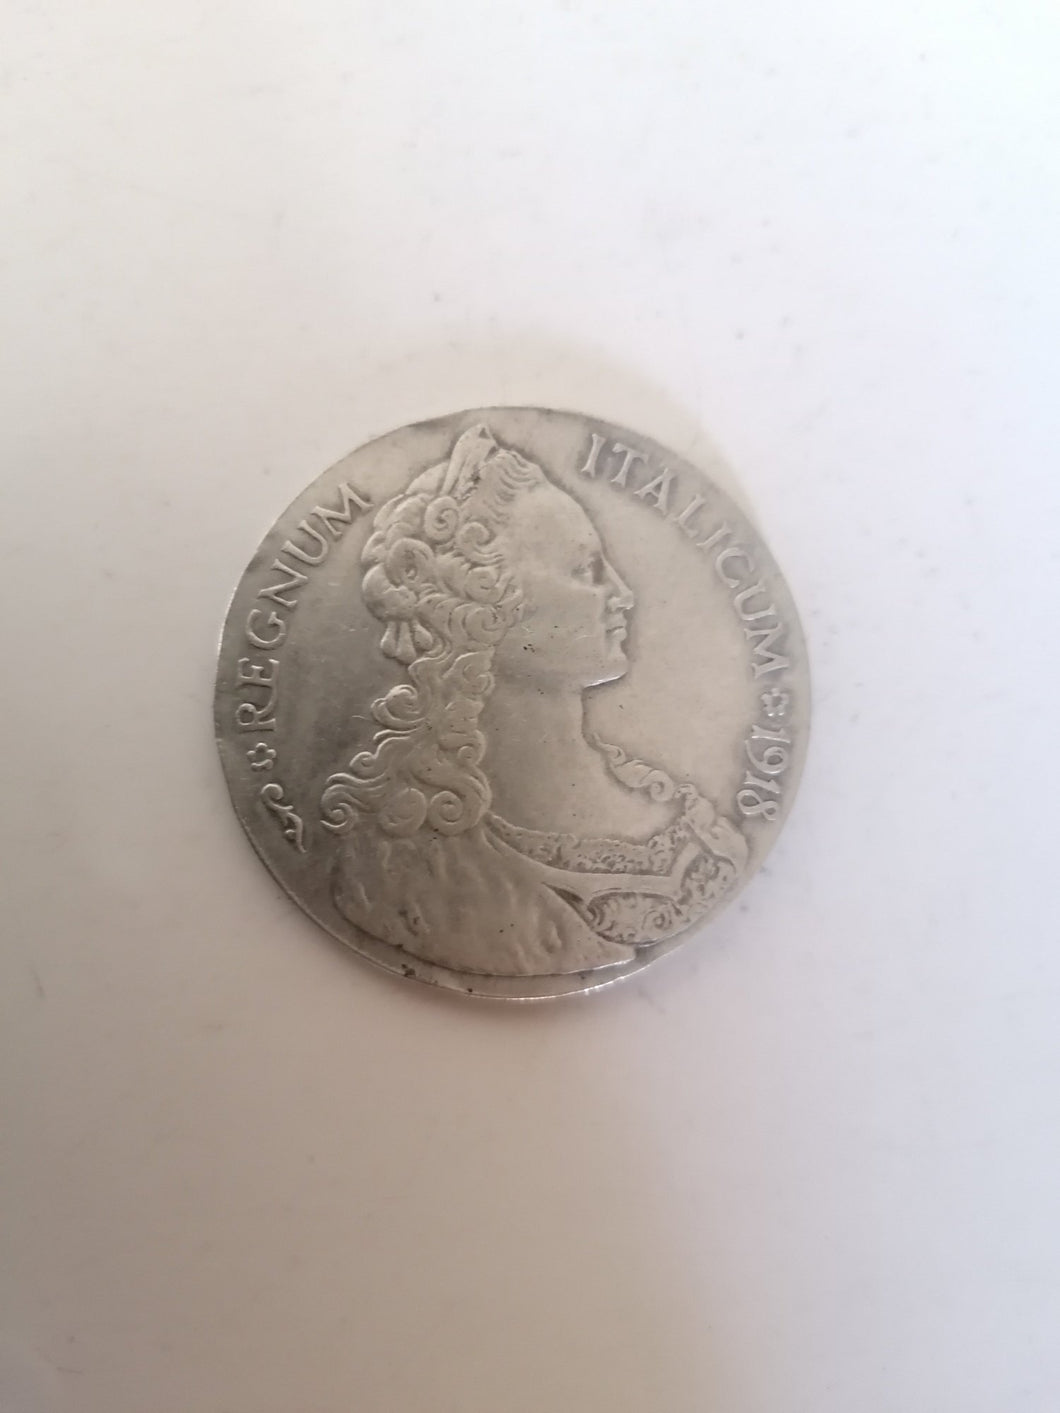 Reproduction argent, Italie, Colonie érythréenne - Tallero Italicum 1918 